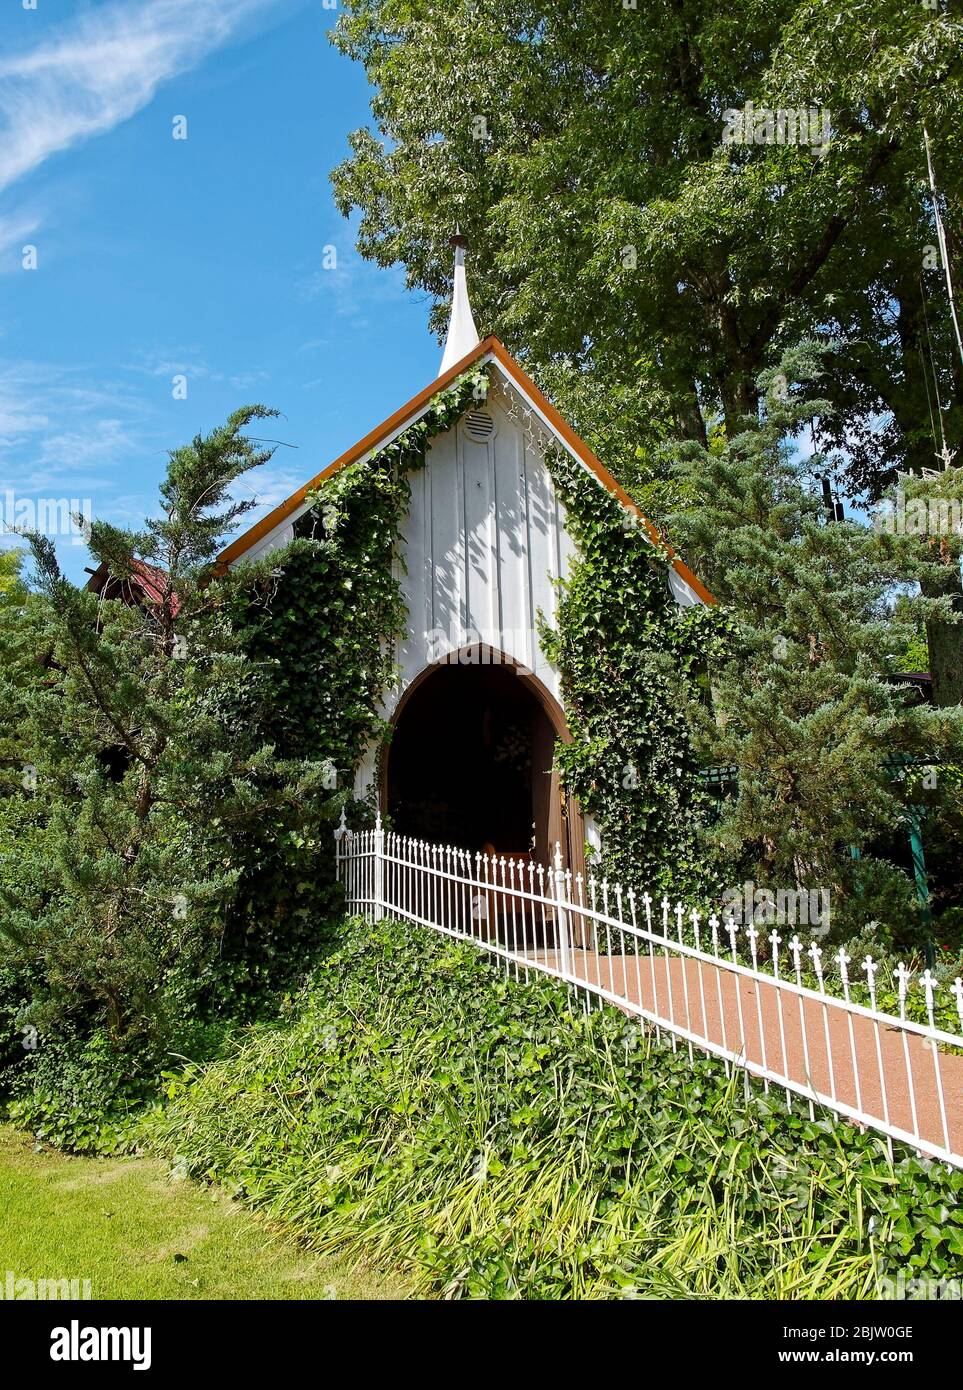 tiny chapel, arched entrance door, ivy climbing walls, white iron picket fence, path, green vegetation, doors open, wedding venue, USA, KY, Kentucky; Stock Photo